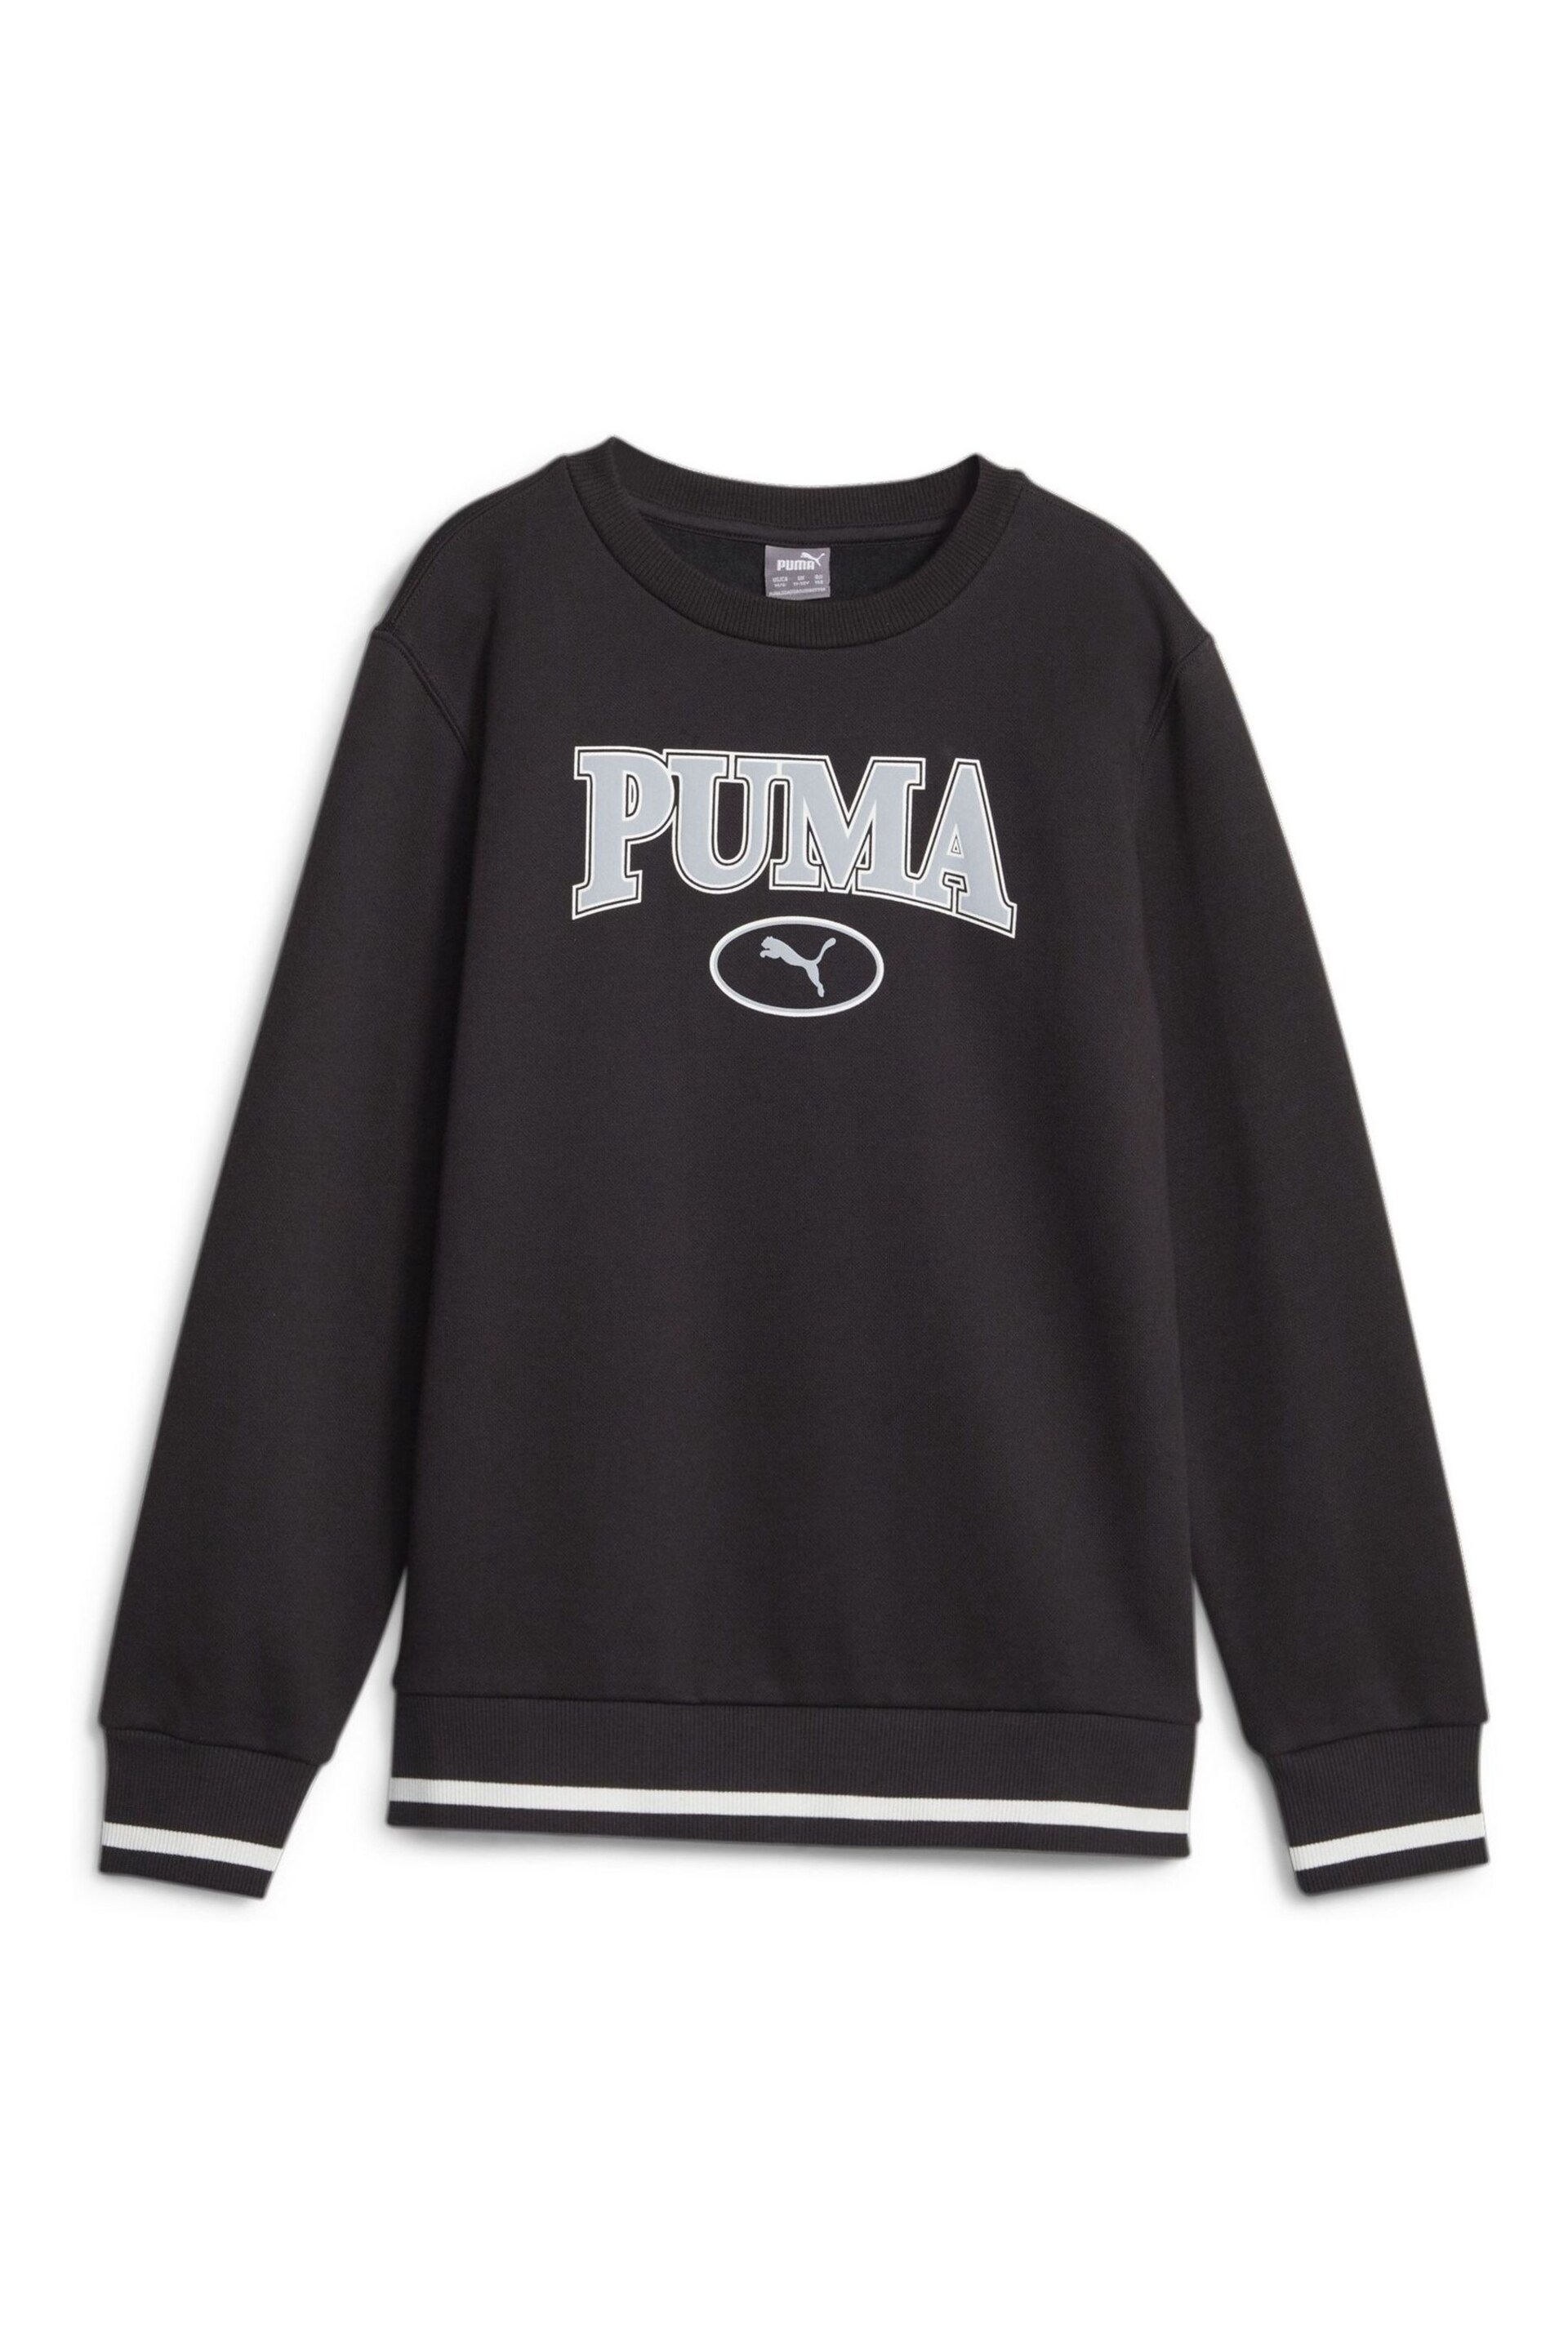 Puma Black Squad Youth Sweatshirt - Image 4 of 5